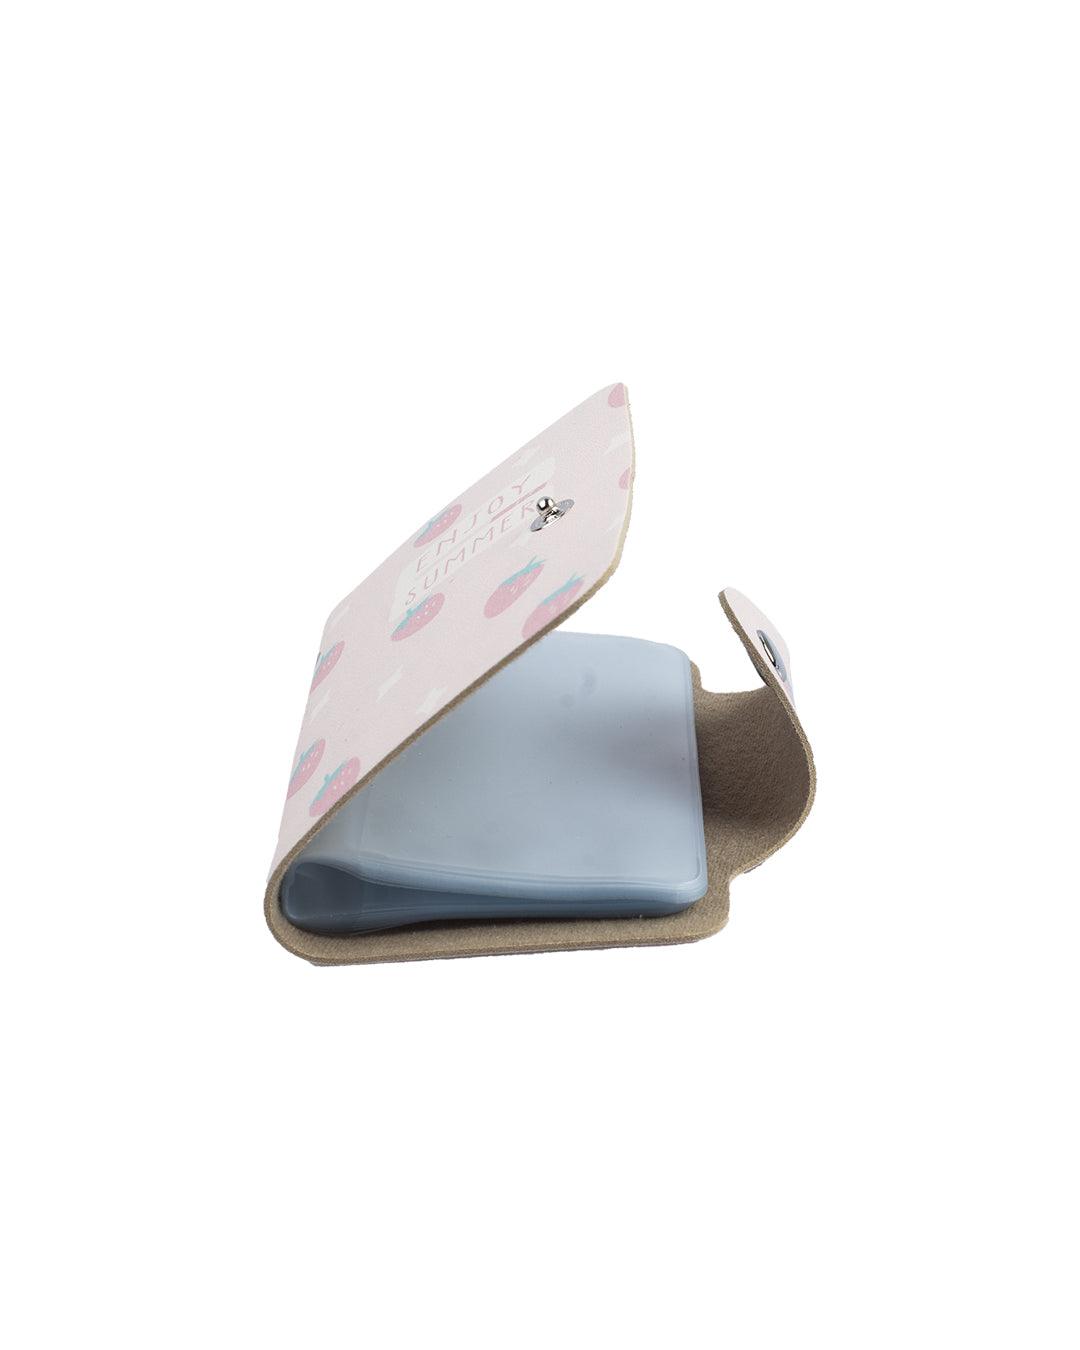 Multi Card Holder, Wallet, Printed, Pink, PU Leather - MARKET 99